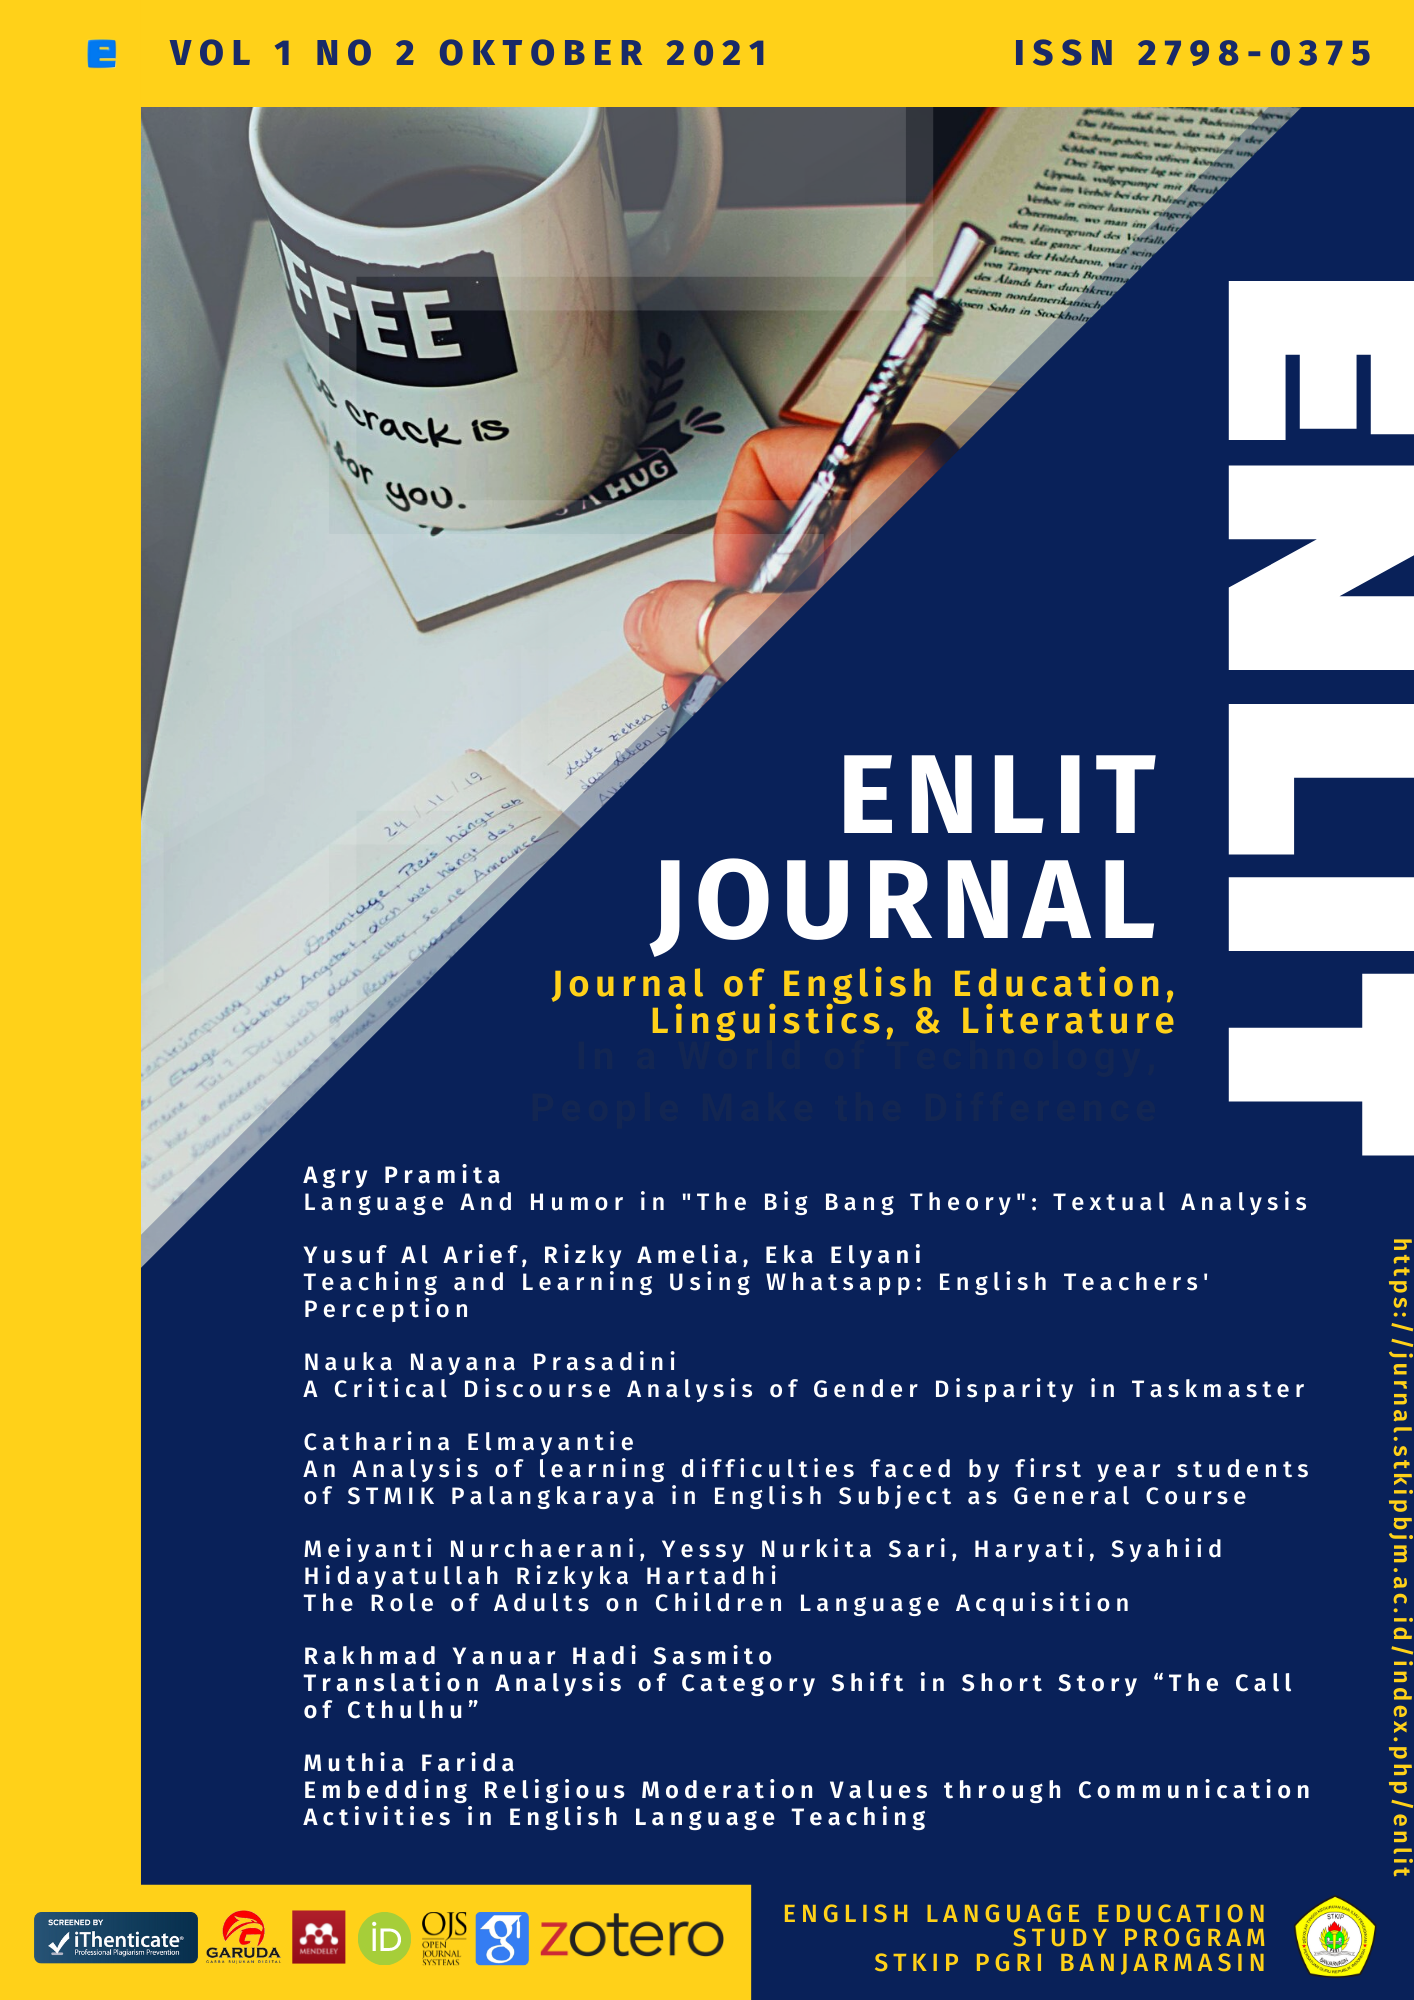 ENLIT_Journal_Vol_1_(2)1.png